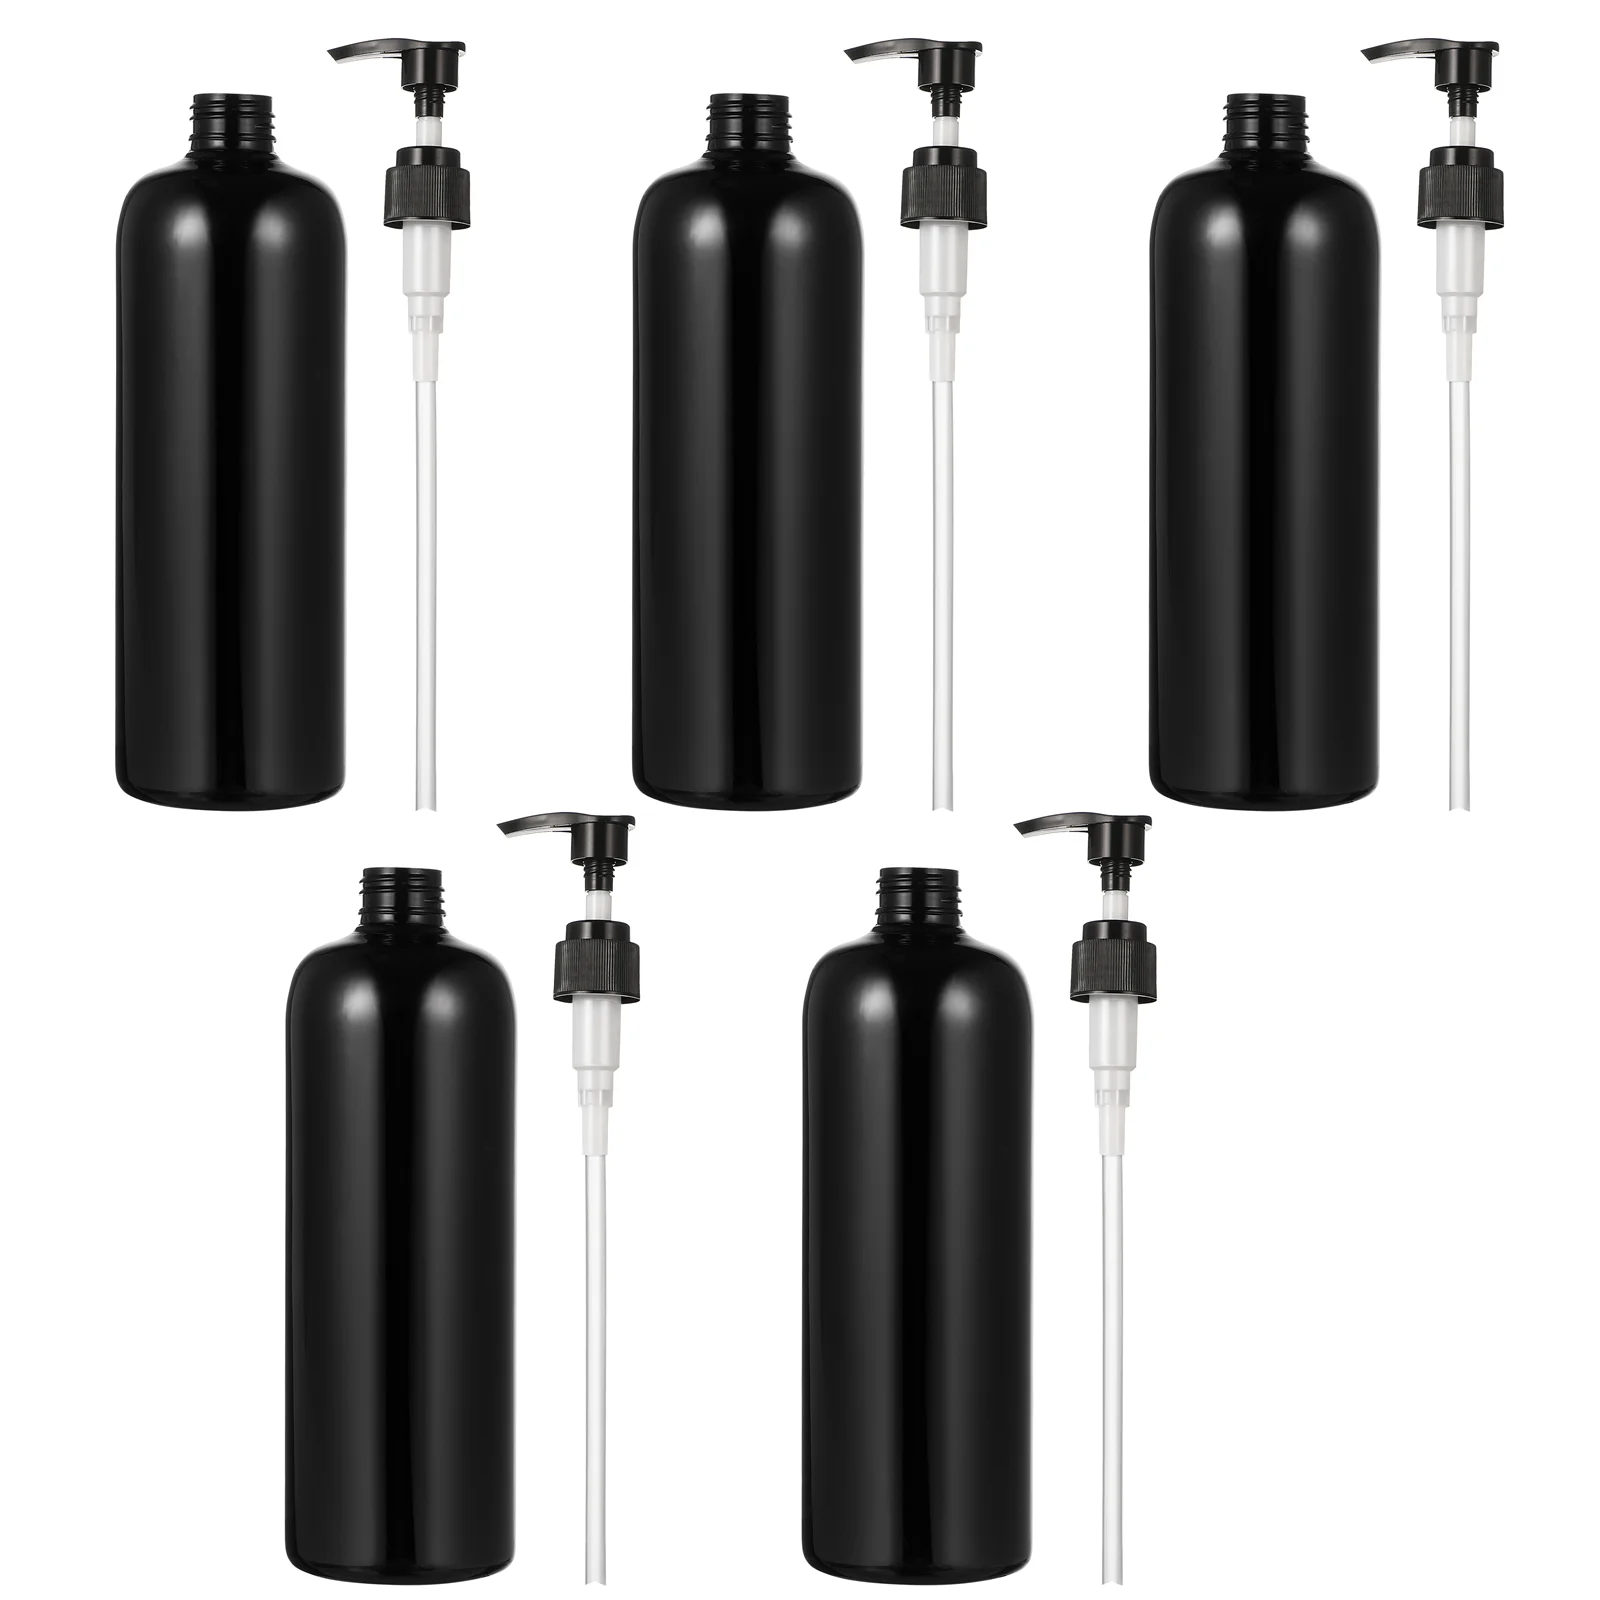 Clean Shampoo Cleansing Shampoo Black Pump Bottle Travel Container Press Pump Bottle Shower Bottles Refillable Black Container